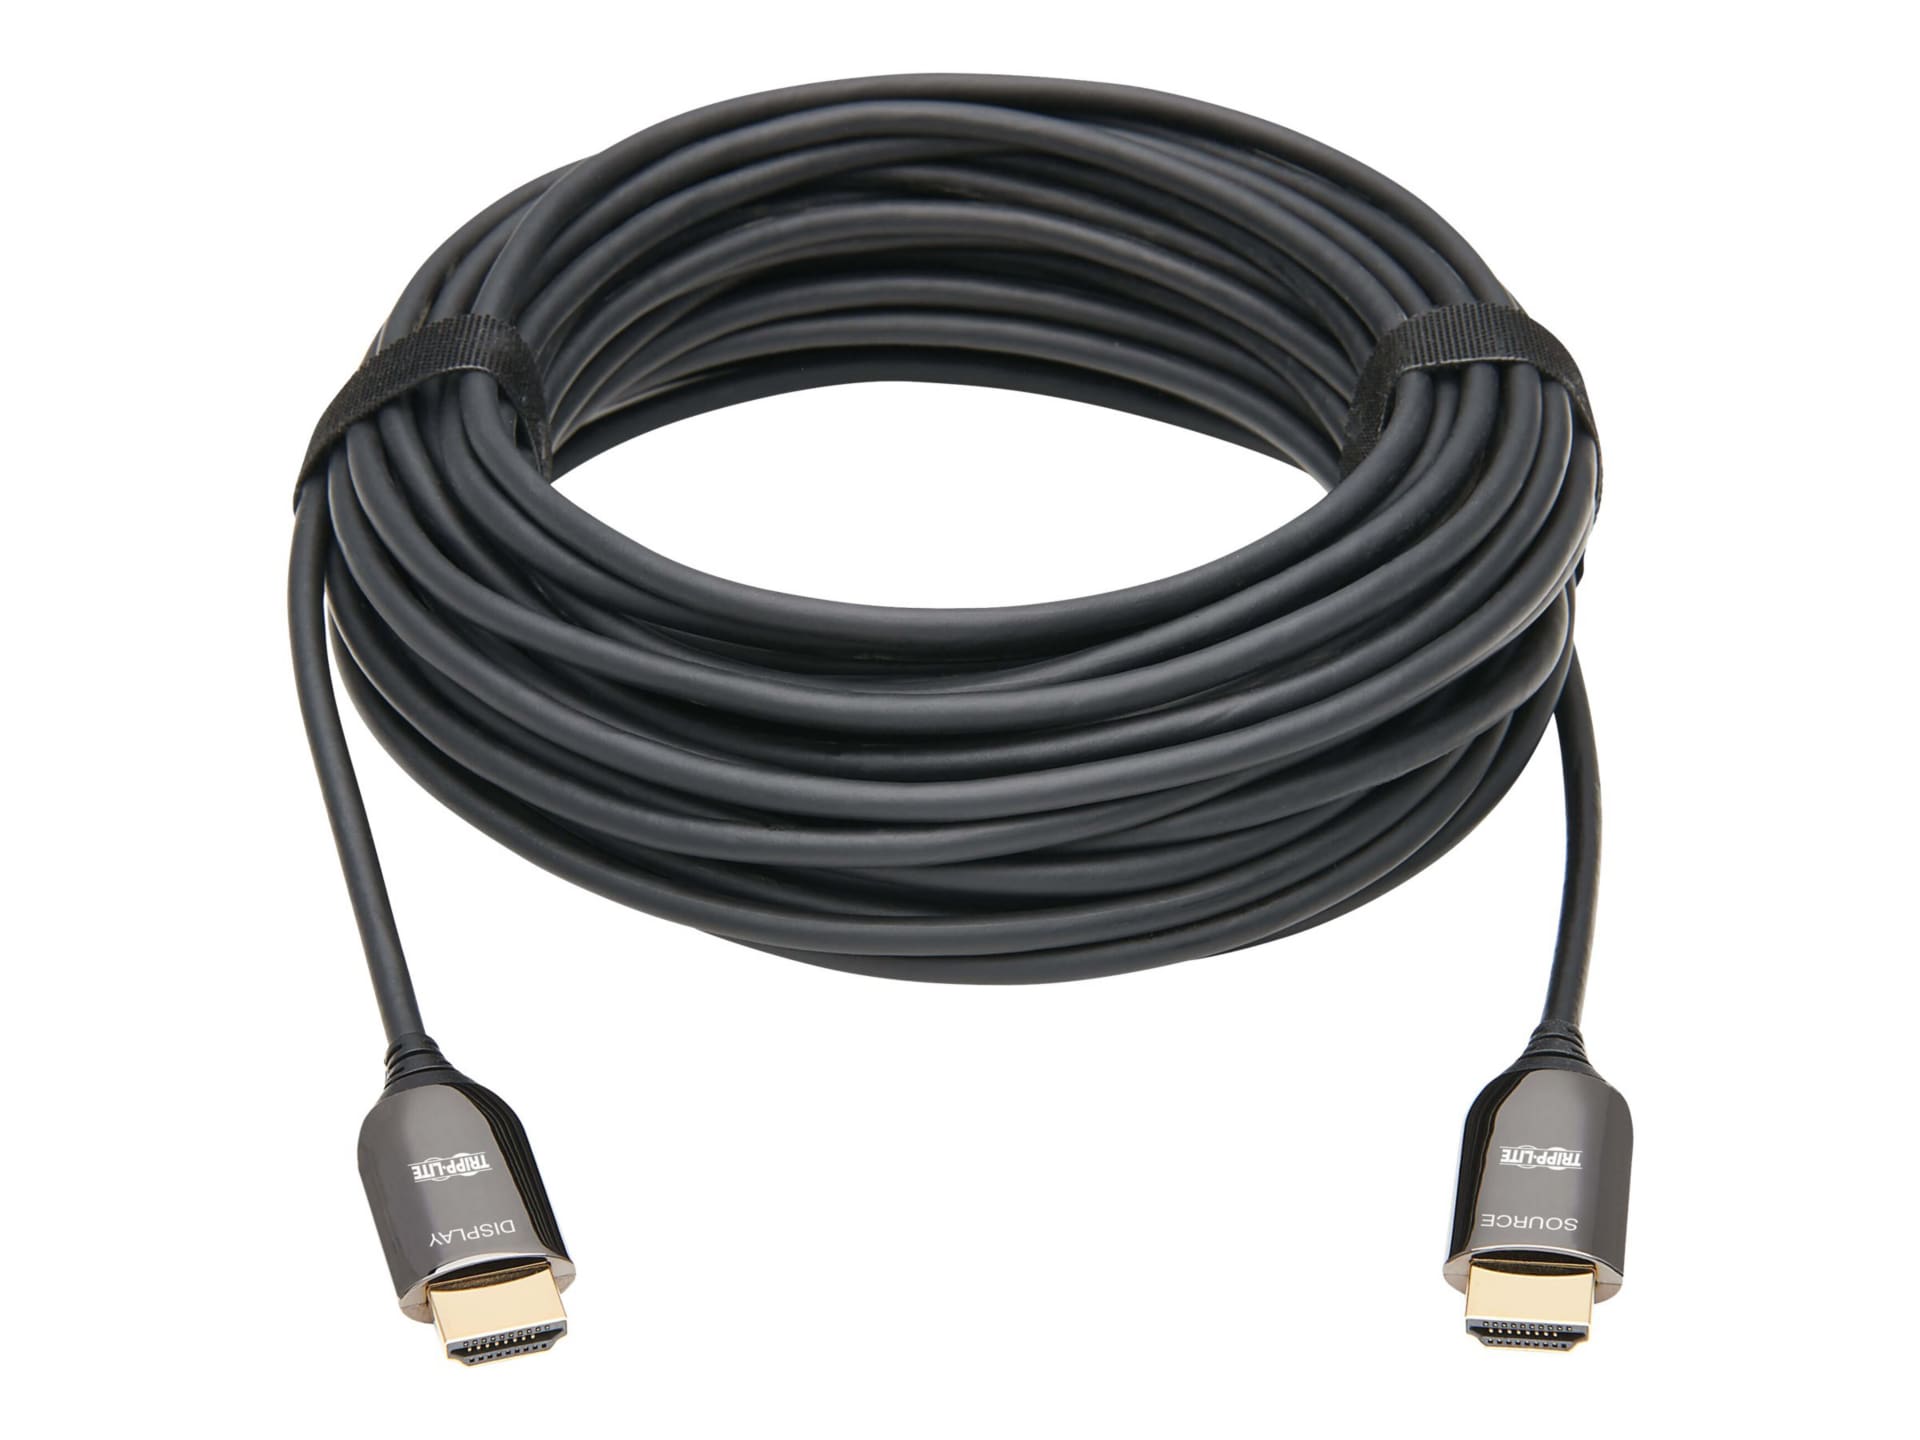 Tripp Lite Fiber Active Optical Cable (AOC) 8K HDMI Plenum-Rated - UHD @ 60 Hz, HDR, M/M, Black, 15 m - HDMI cable with